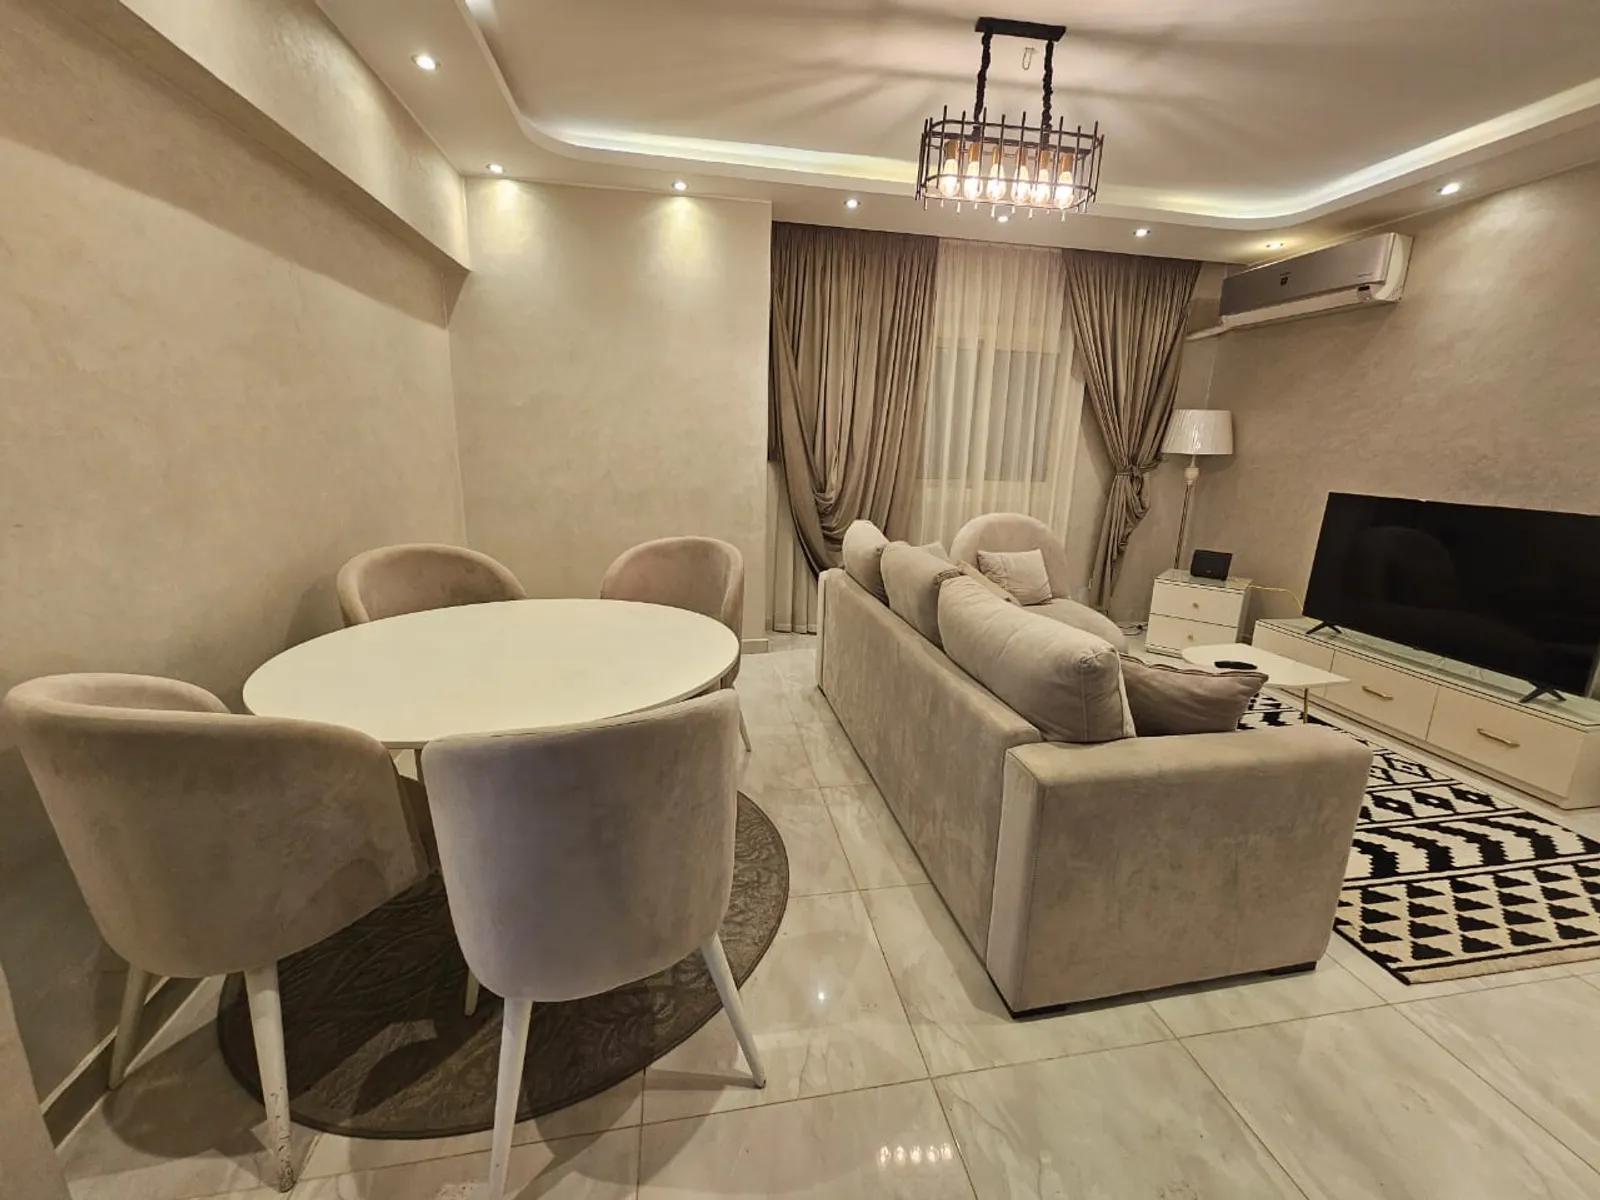 Ground Floors For Sale In Maadi Maadi Degla Area: 110 m² consists of 2 Bedrooms 1 Bathrooms Modern furnished 5 stars #5811